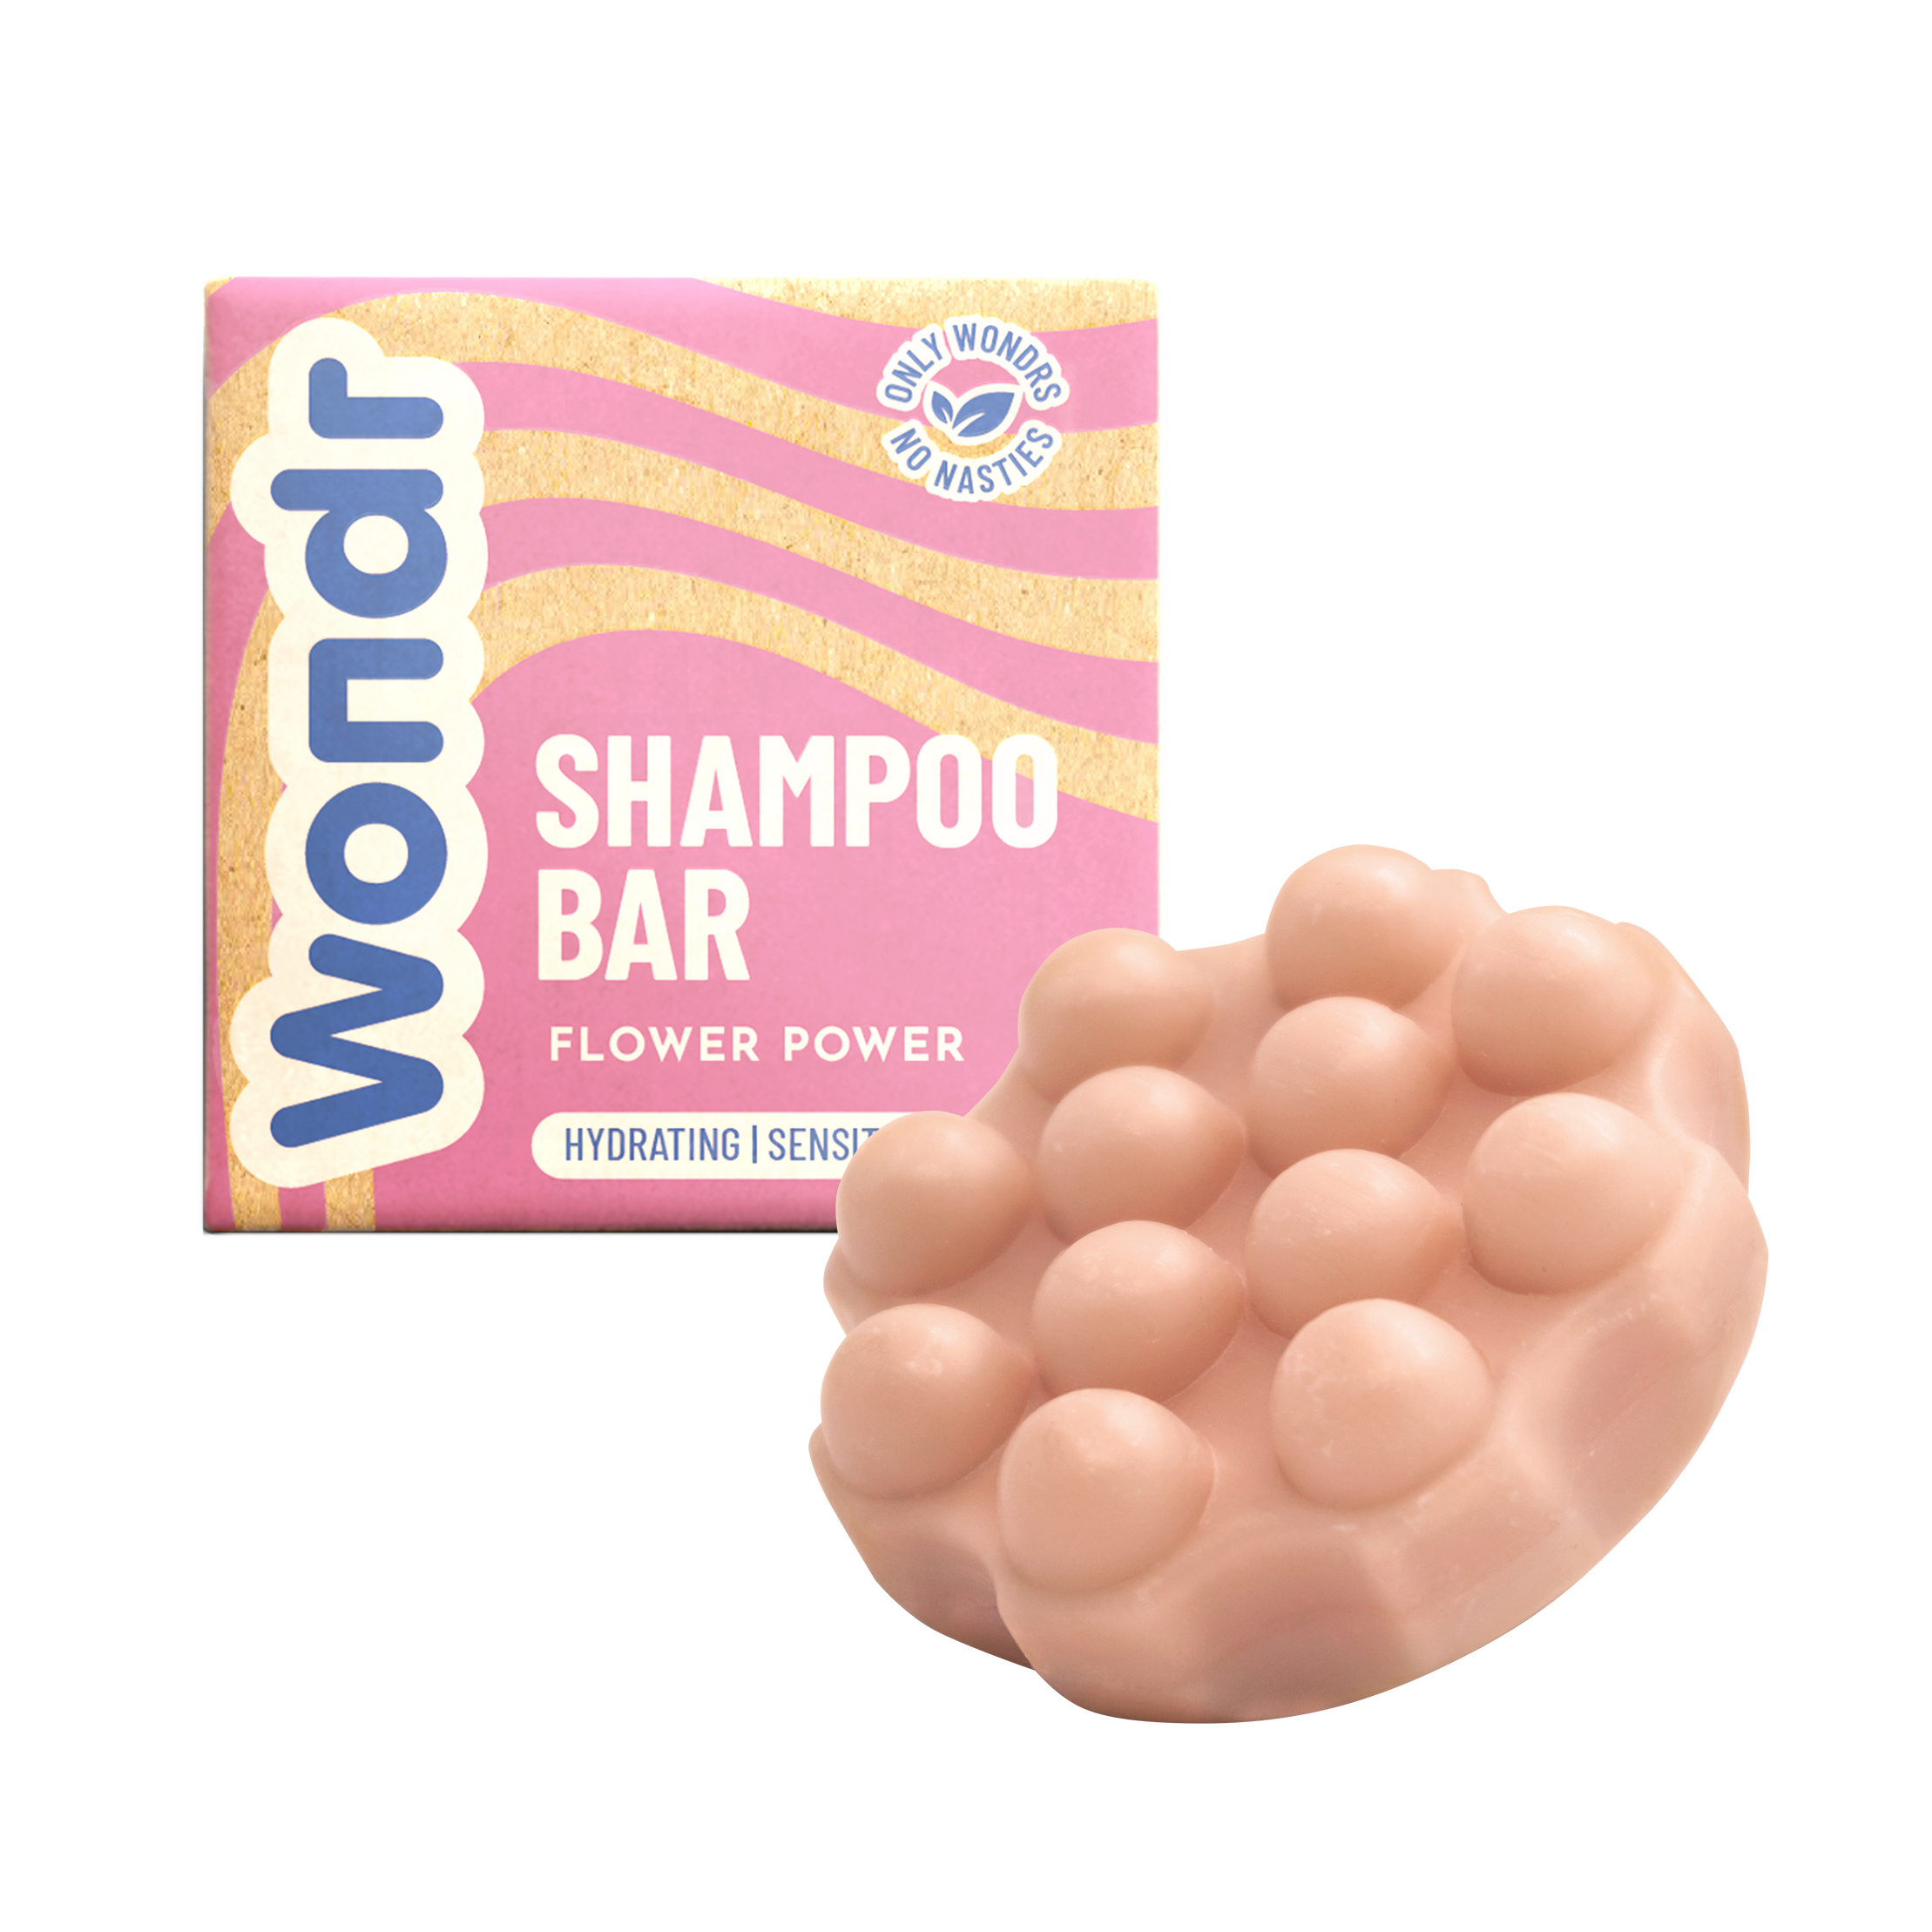 shampoo-bar-flower-power